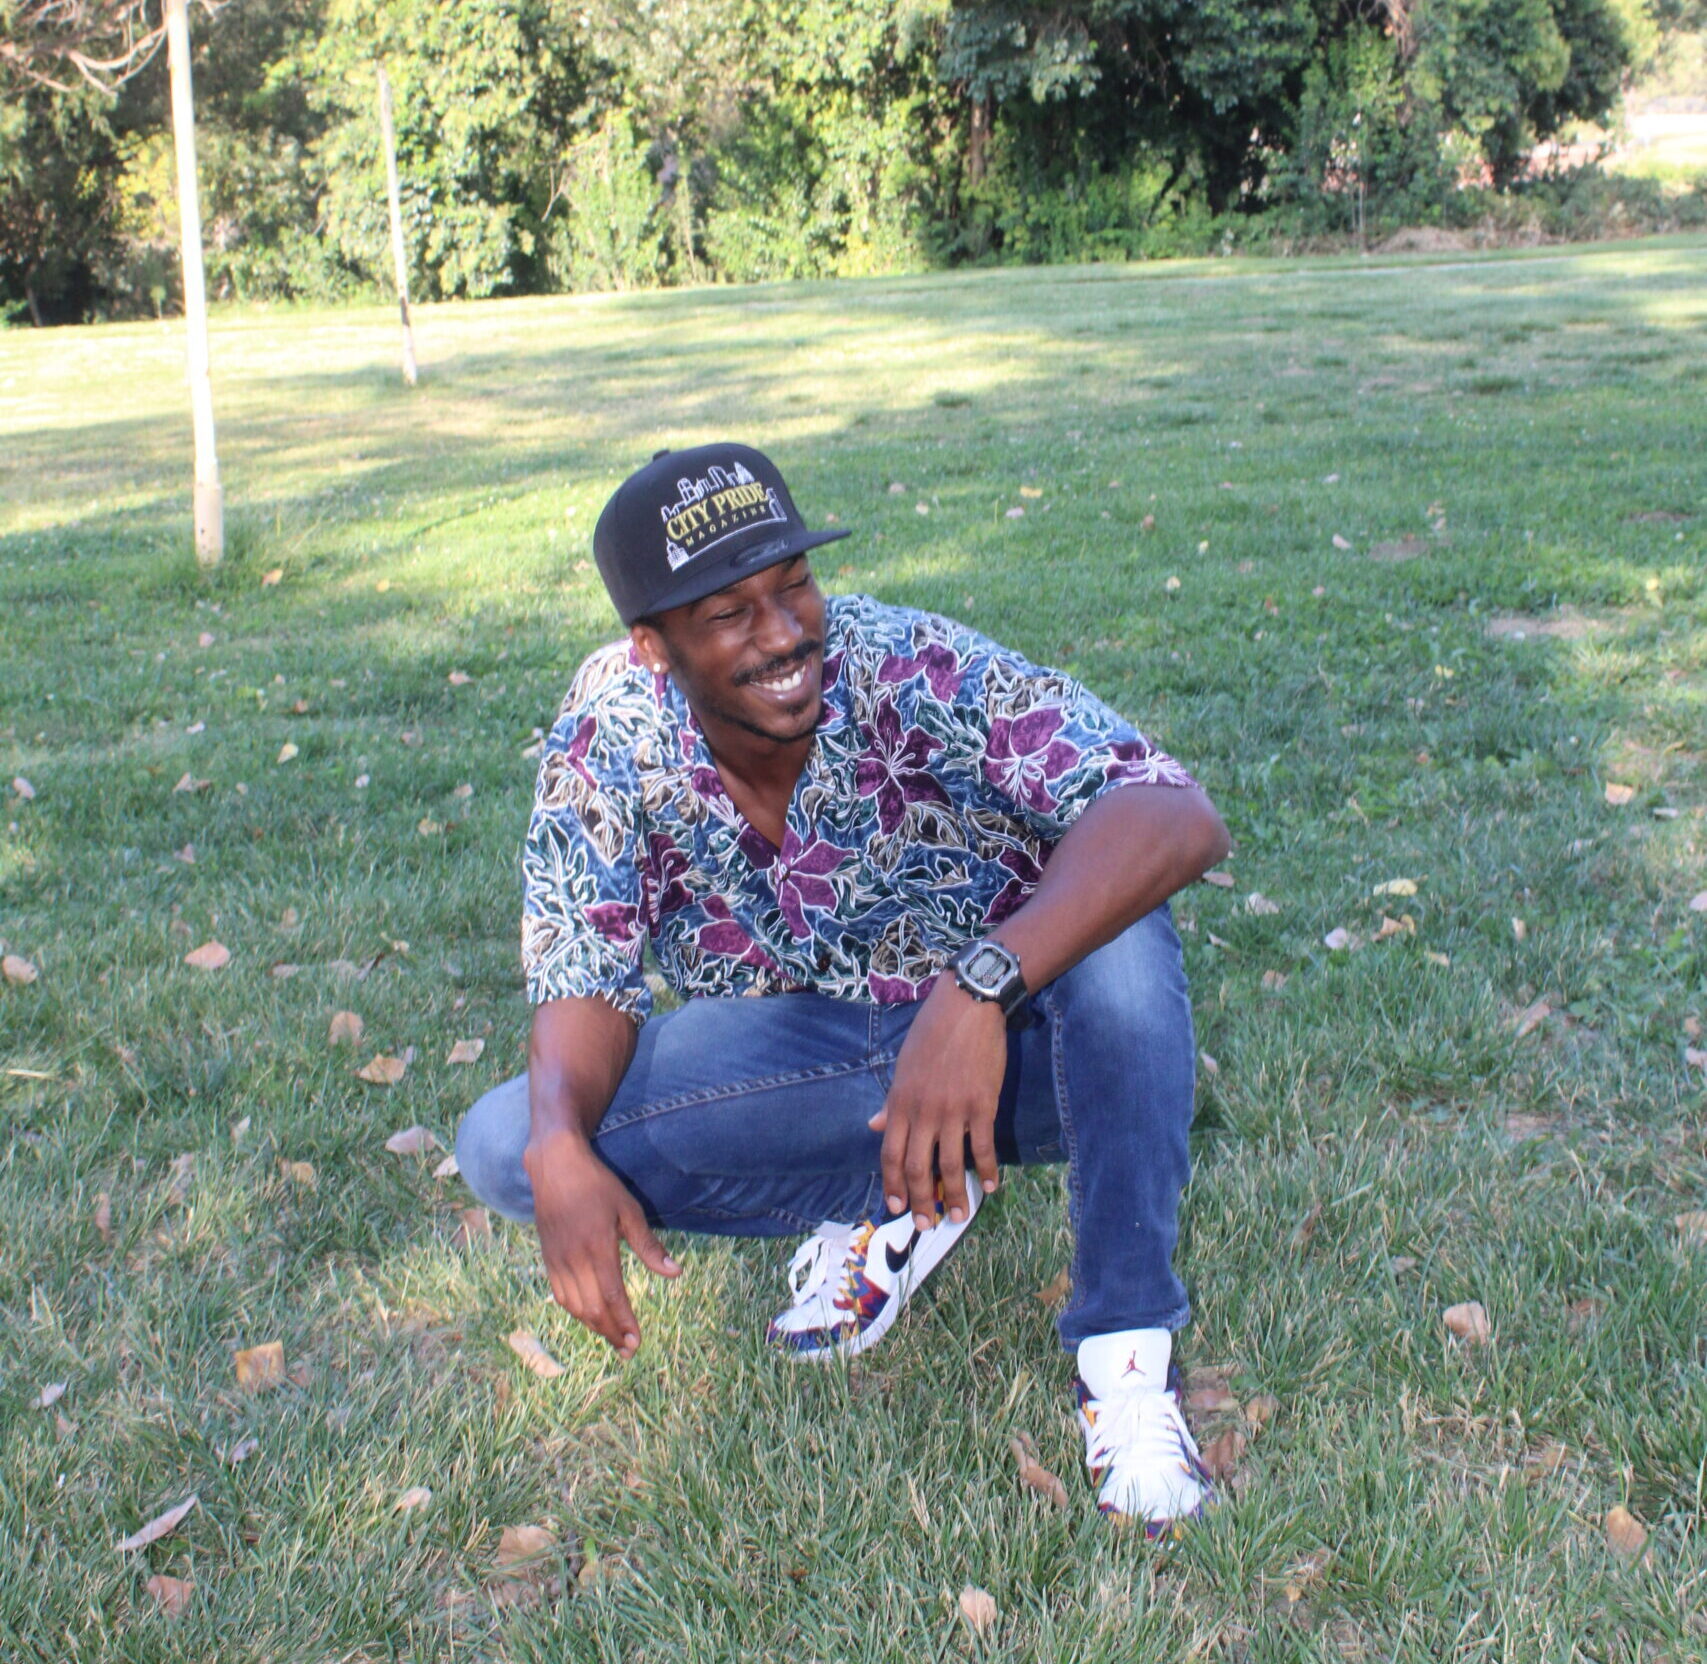 Emon Johnson smiling while on grass